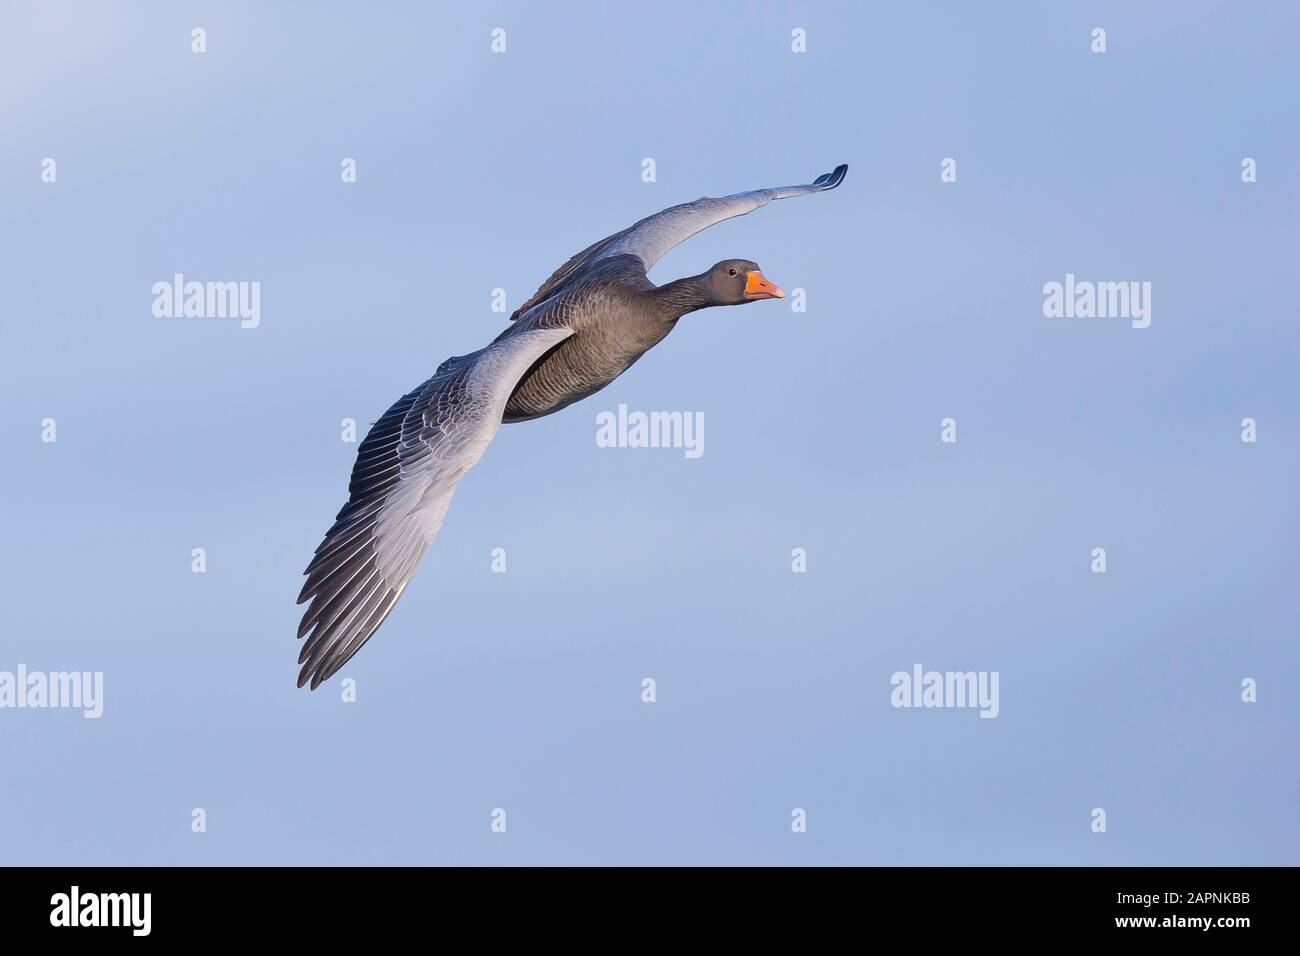 Wild UK greylag goose (Anser anser) isolated in midair flight wings spread, flying in blue winter sky. Greylag geese UK wildlife. Stock Photo